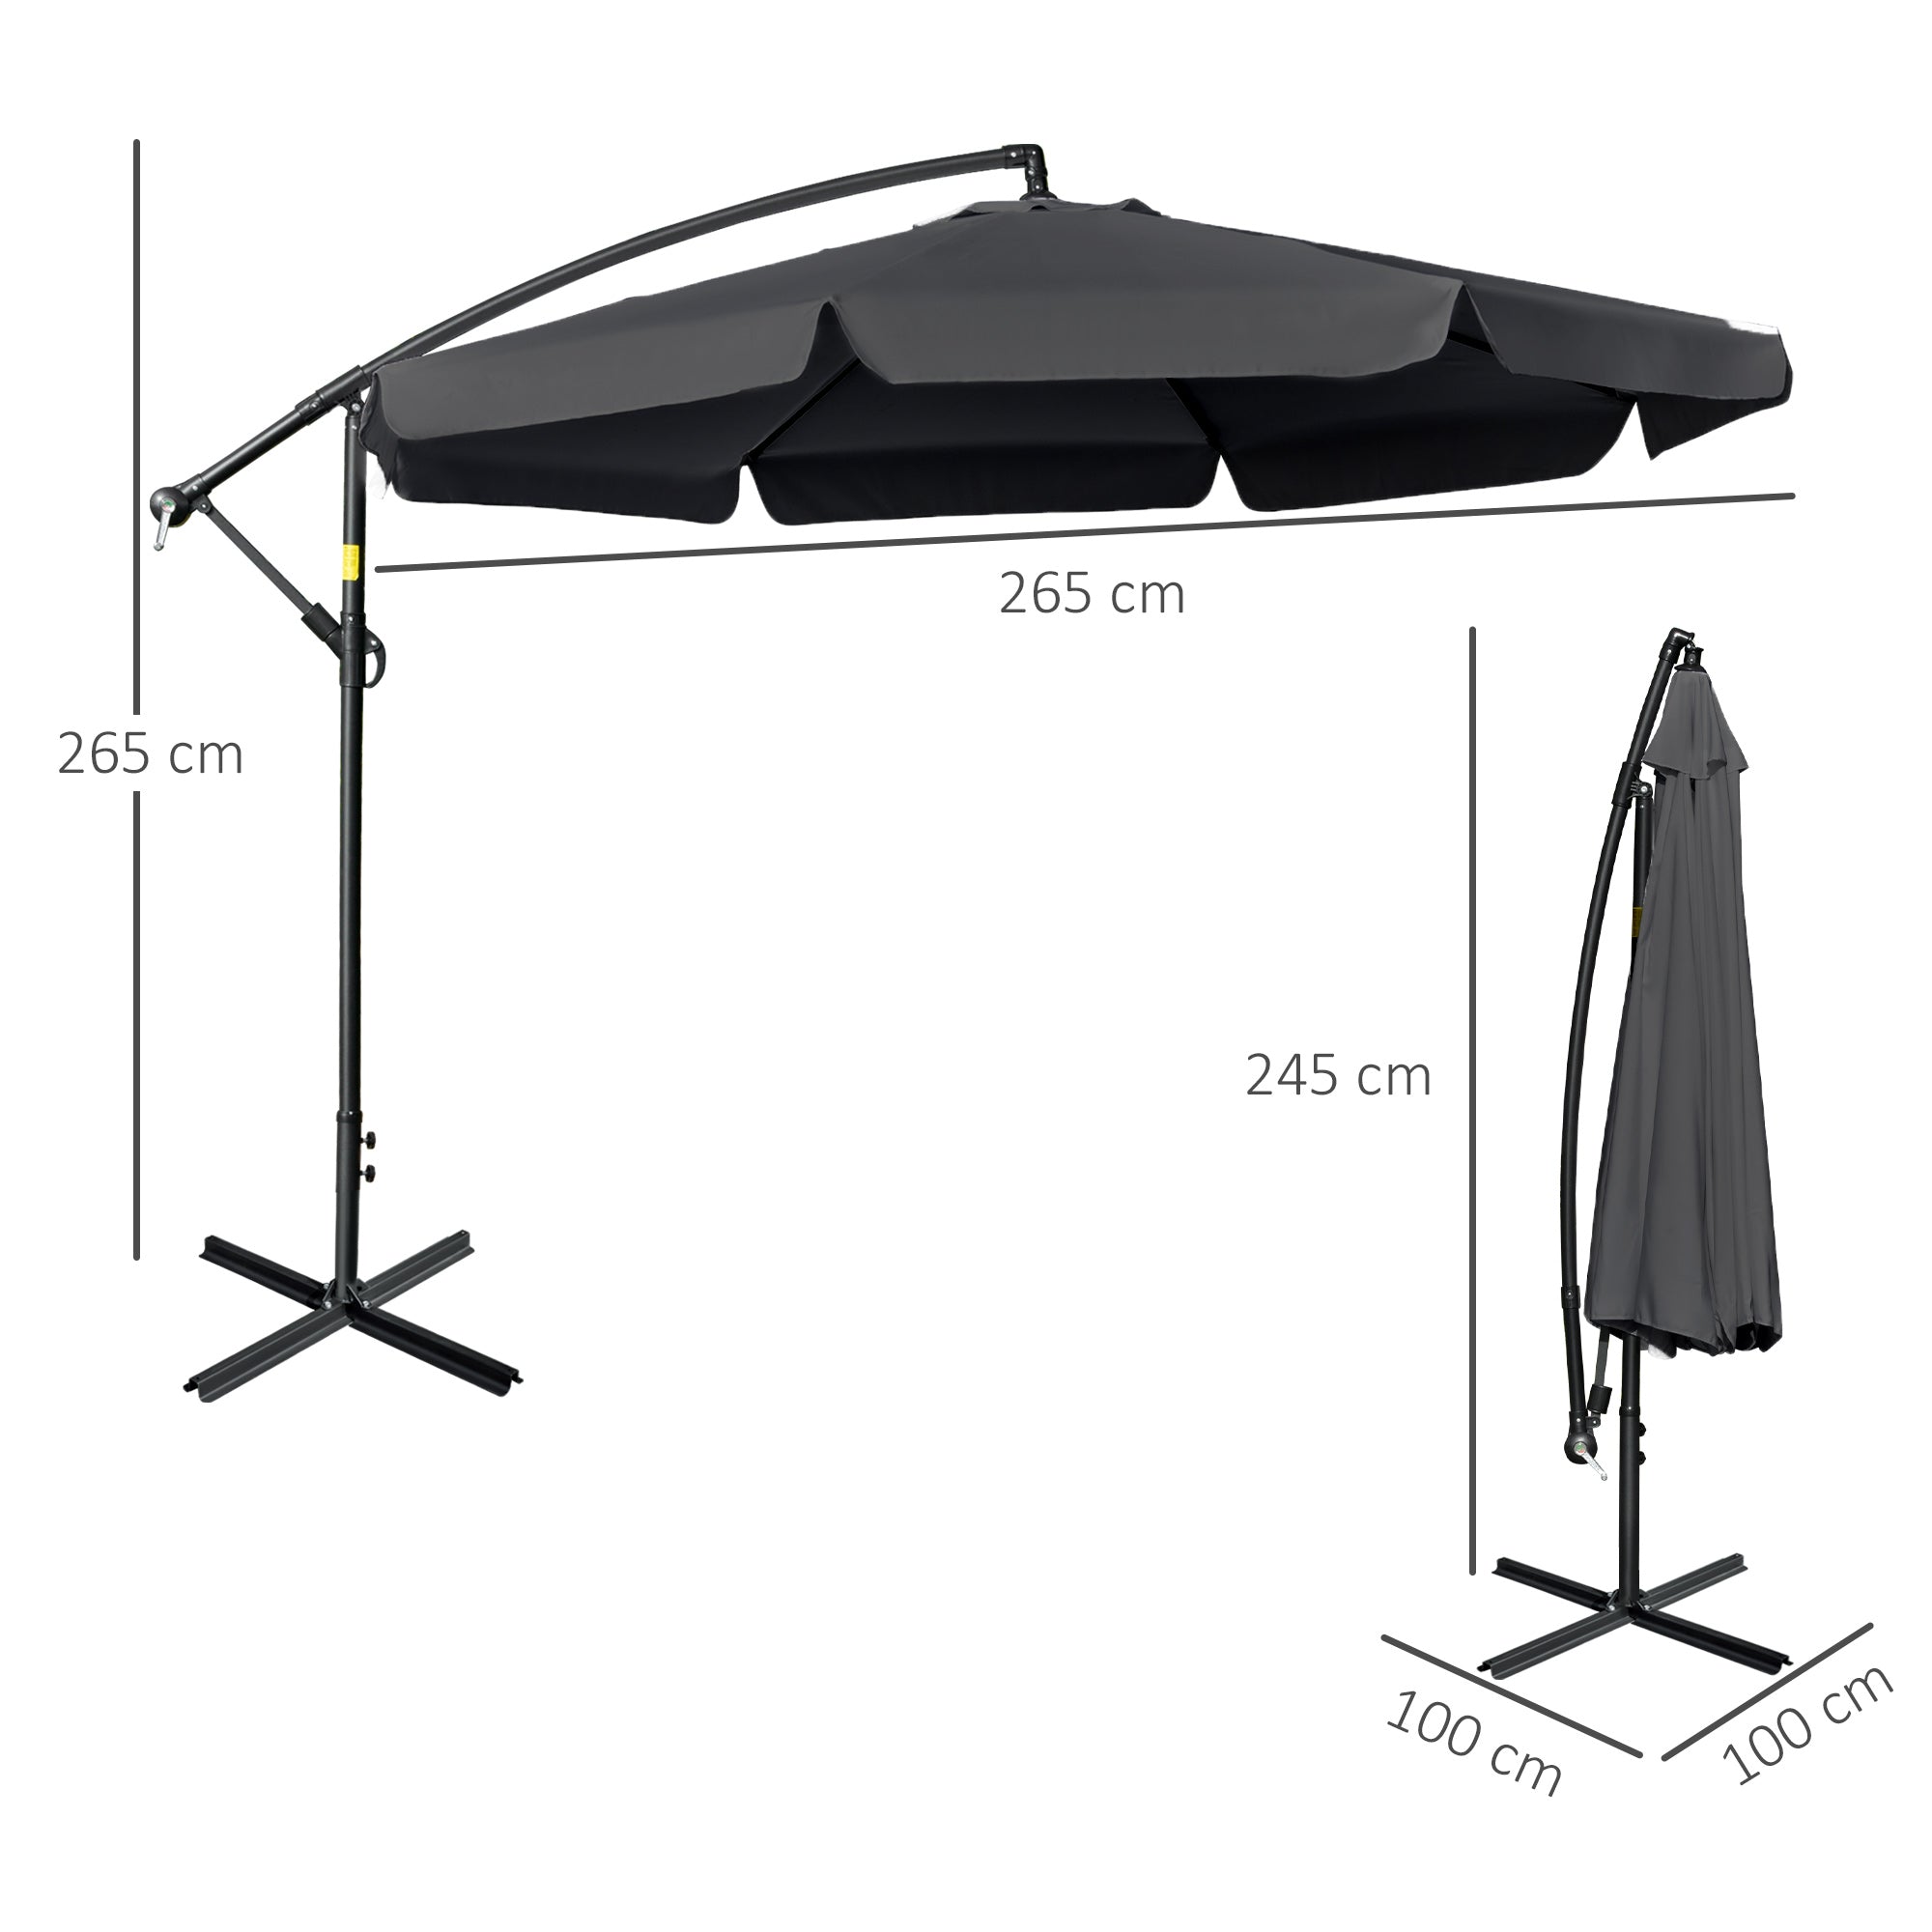 2.7m Banana Parasol Cantilever Umbrella with Crank Handle and Cross Base for Outdoor, Hanging Sun Shade, Black-2